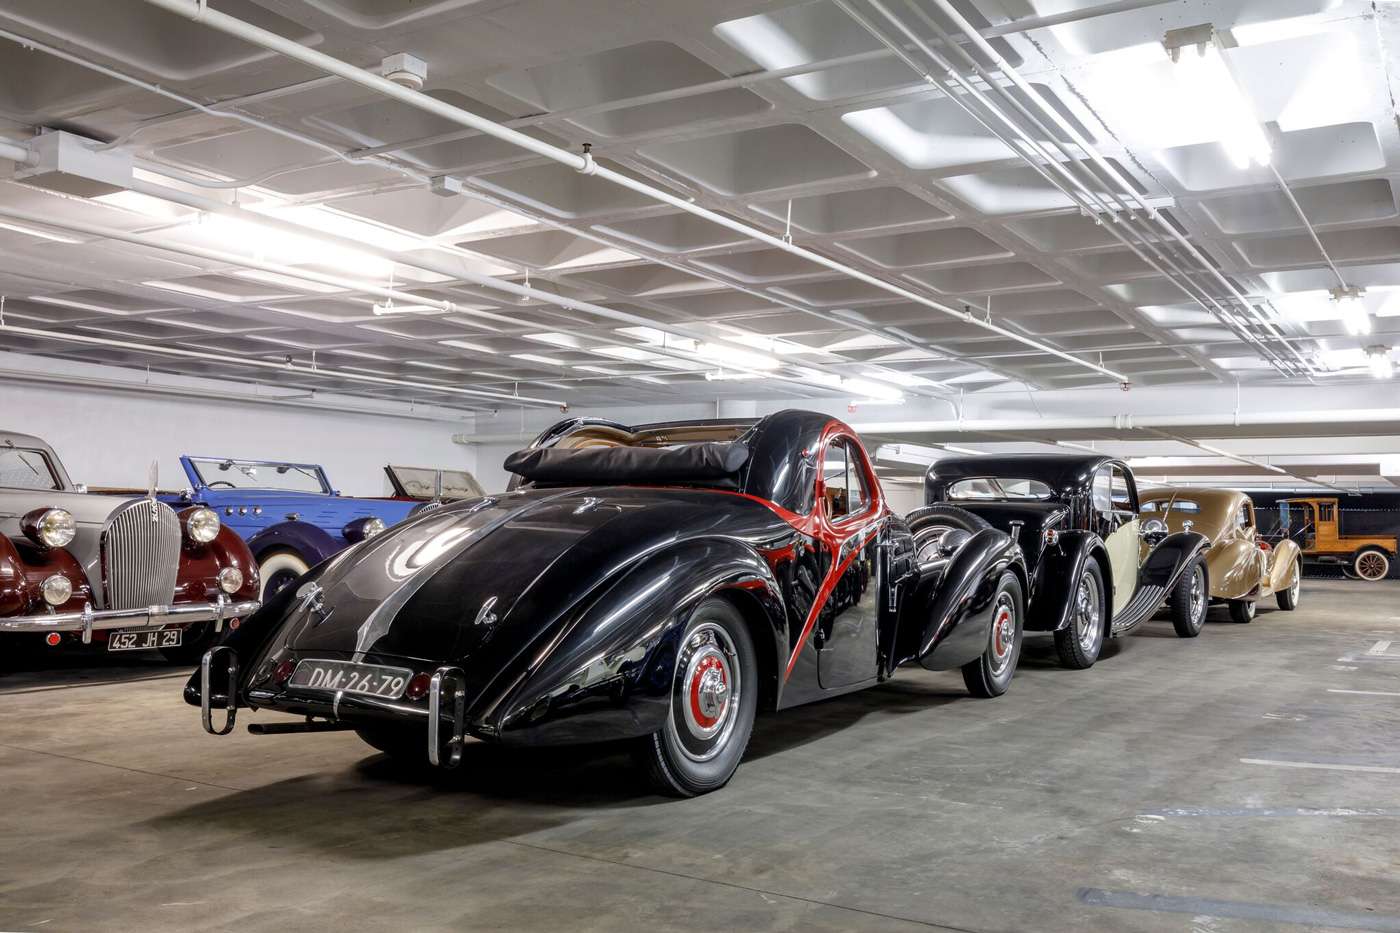 The Petersen Automotive Museum of Los Angeles